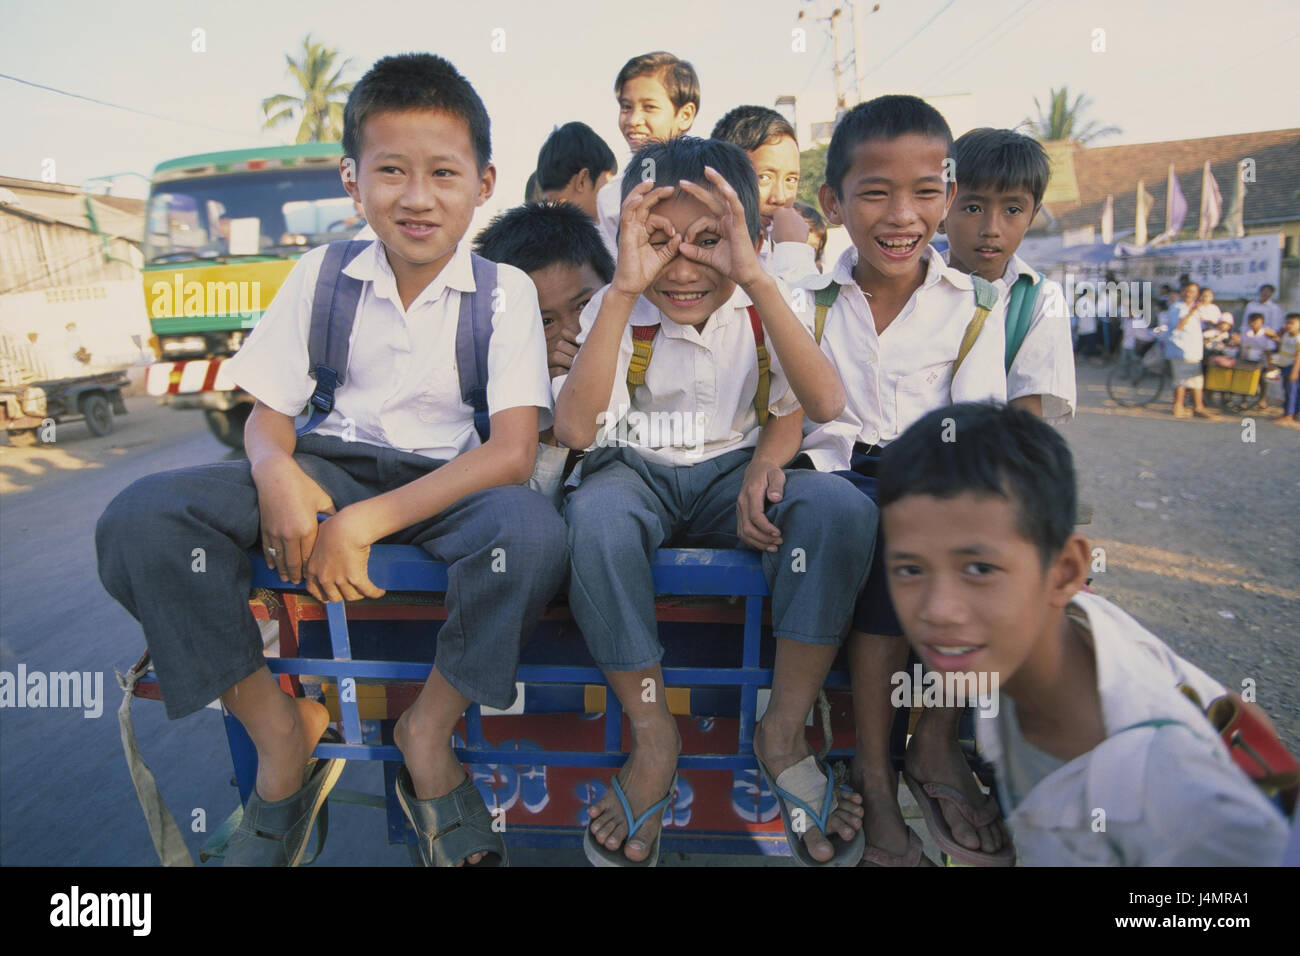 Cambodia, Phnom Penh, street scene, trailer, school children, happily no model release, South-East Asia, capital, school bus, vehicle, transport, promotion, children, boys, unit clothes, fun, laugh, joy Stock Photo